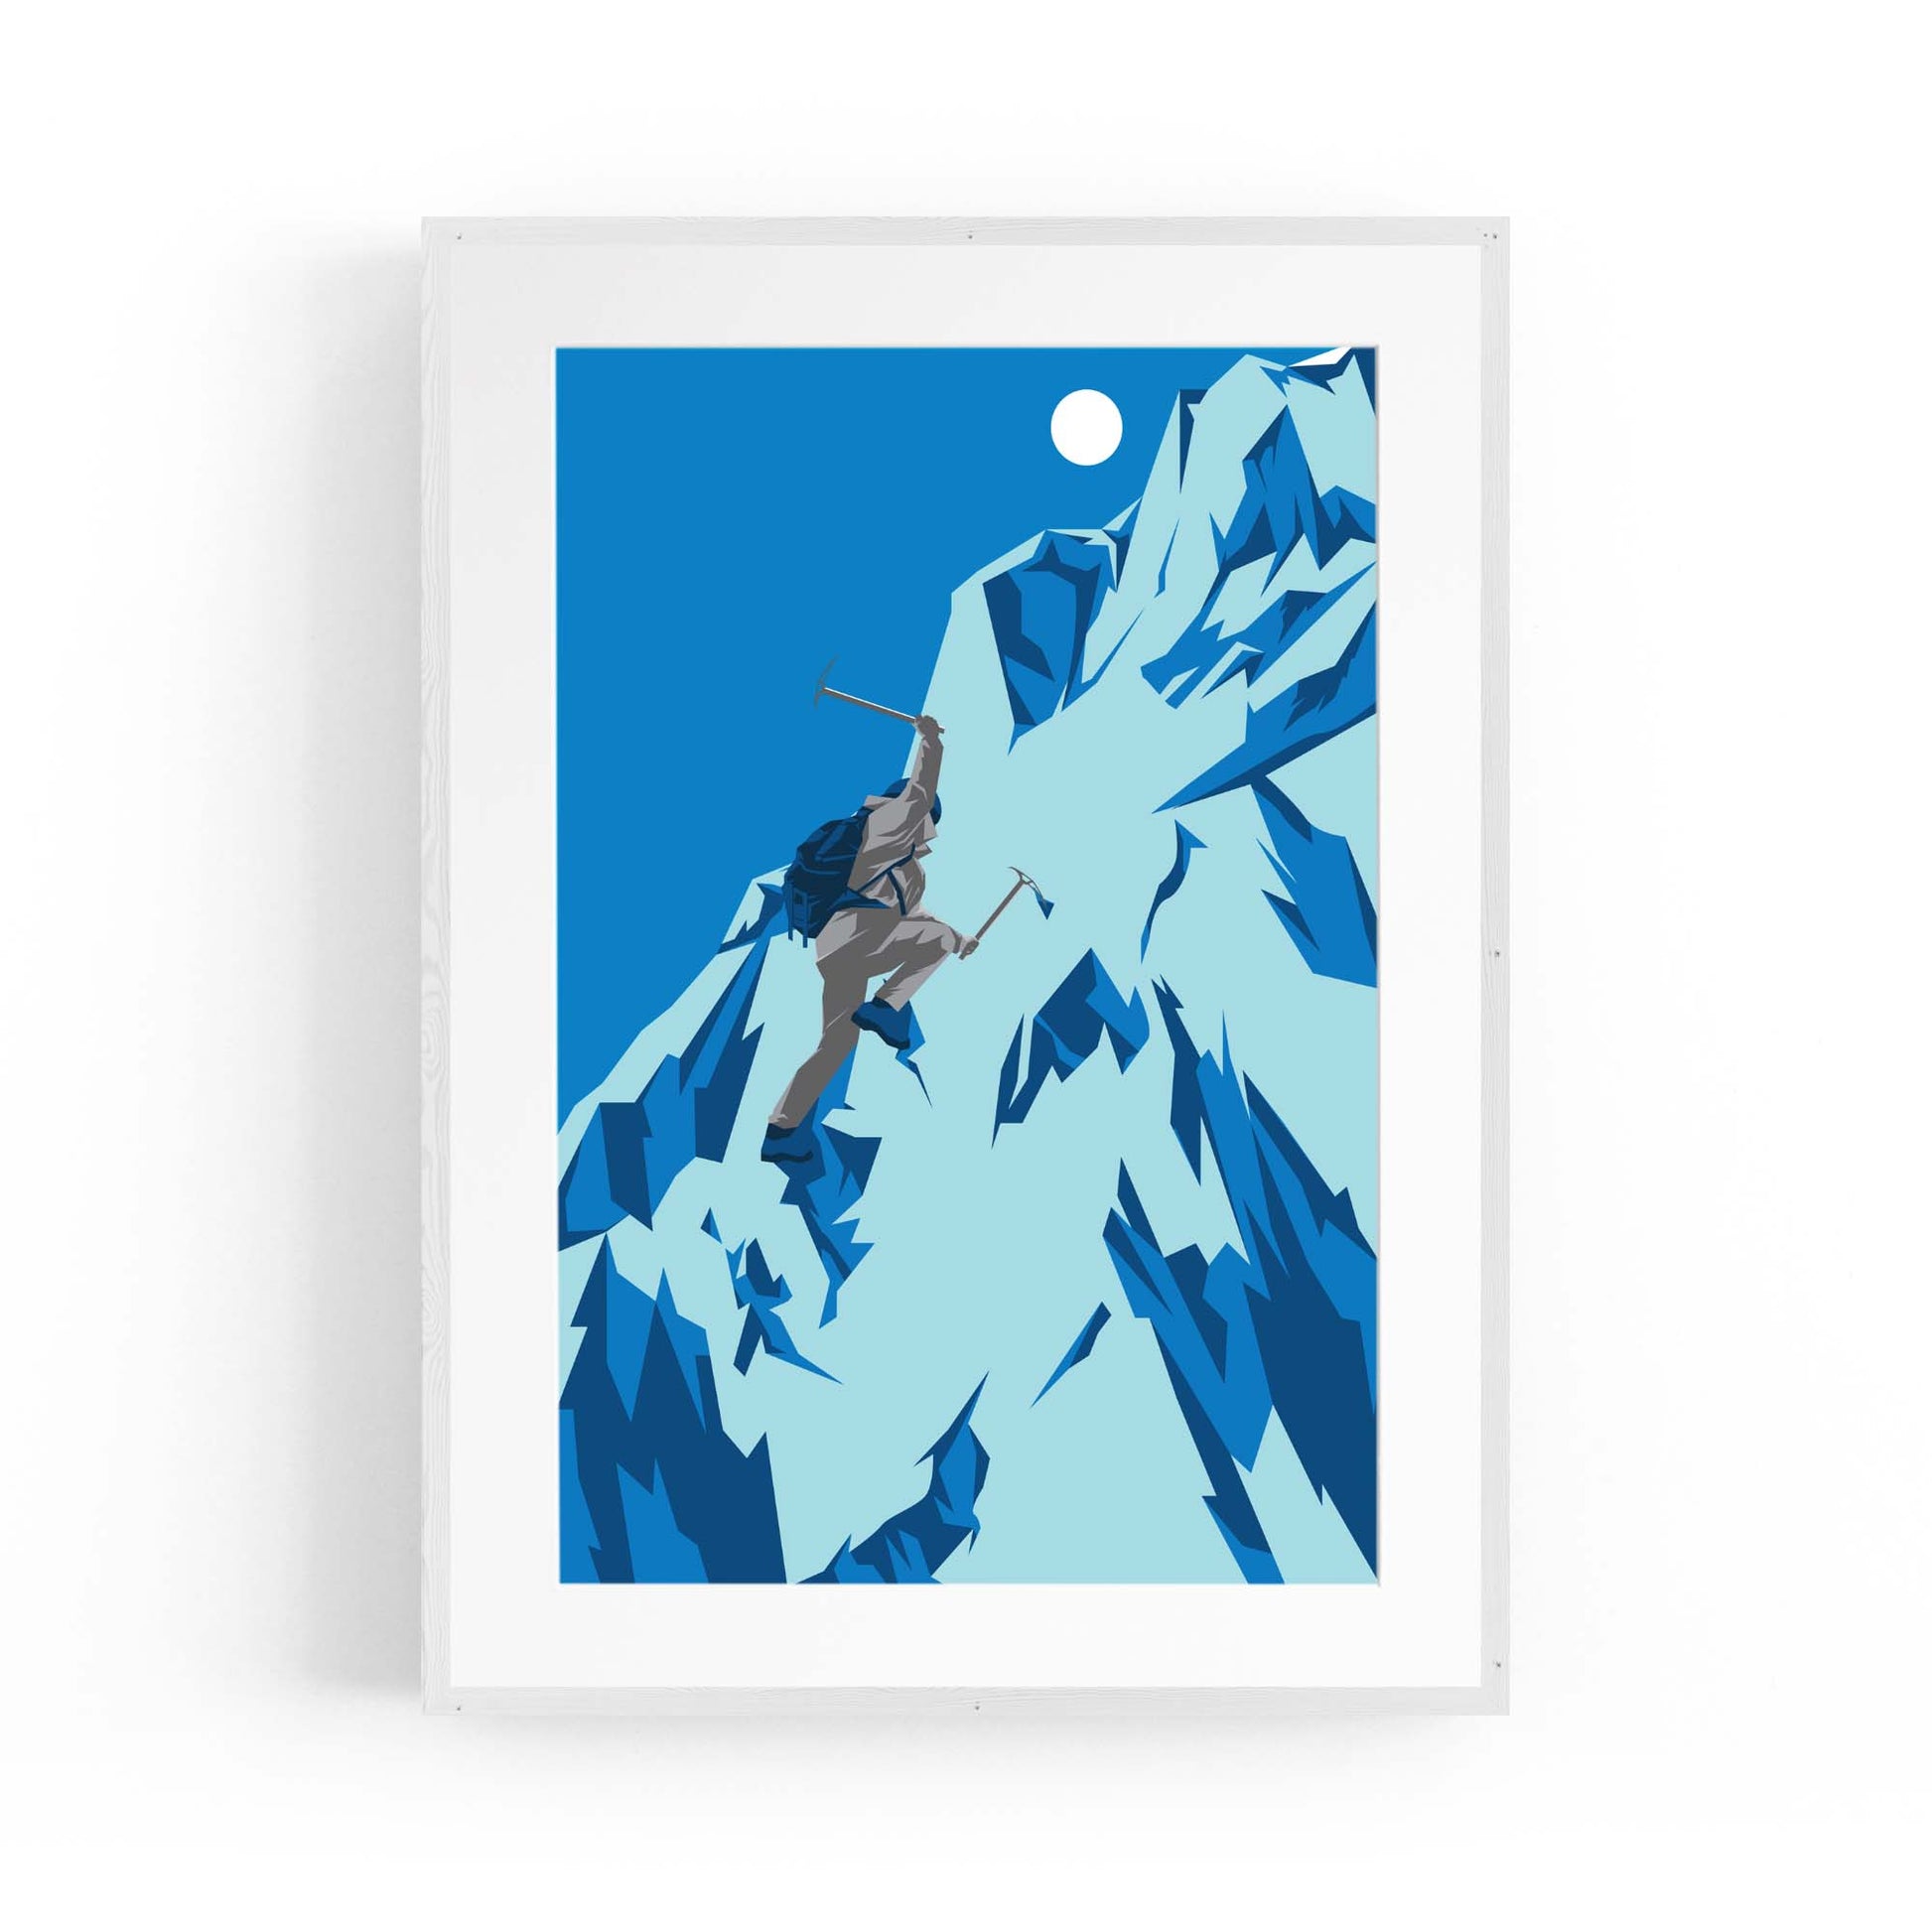 Retro Mountain Climbing Winter Sports Wall Art #3 - The Affordable Art Company